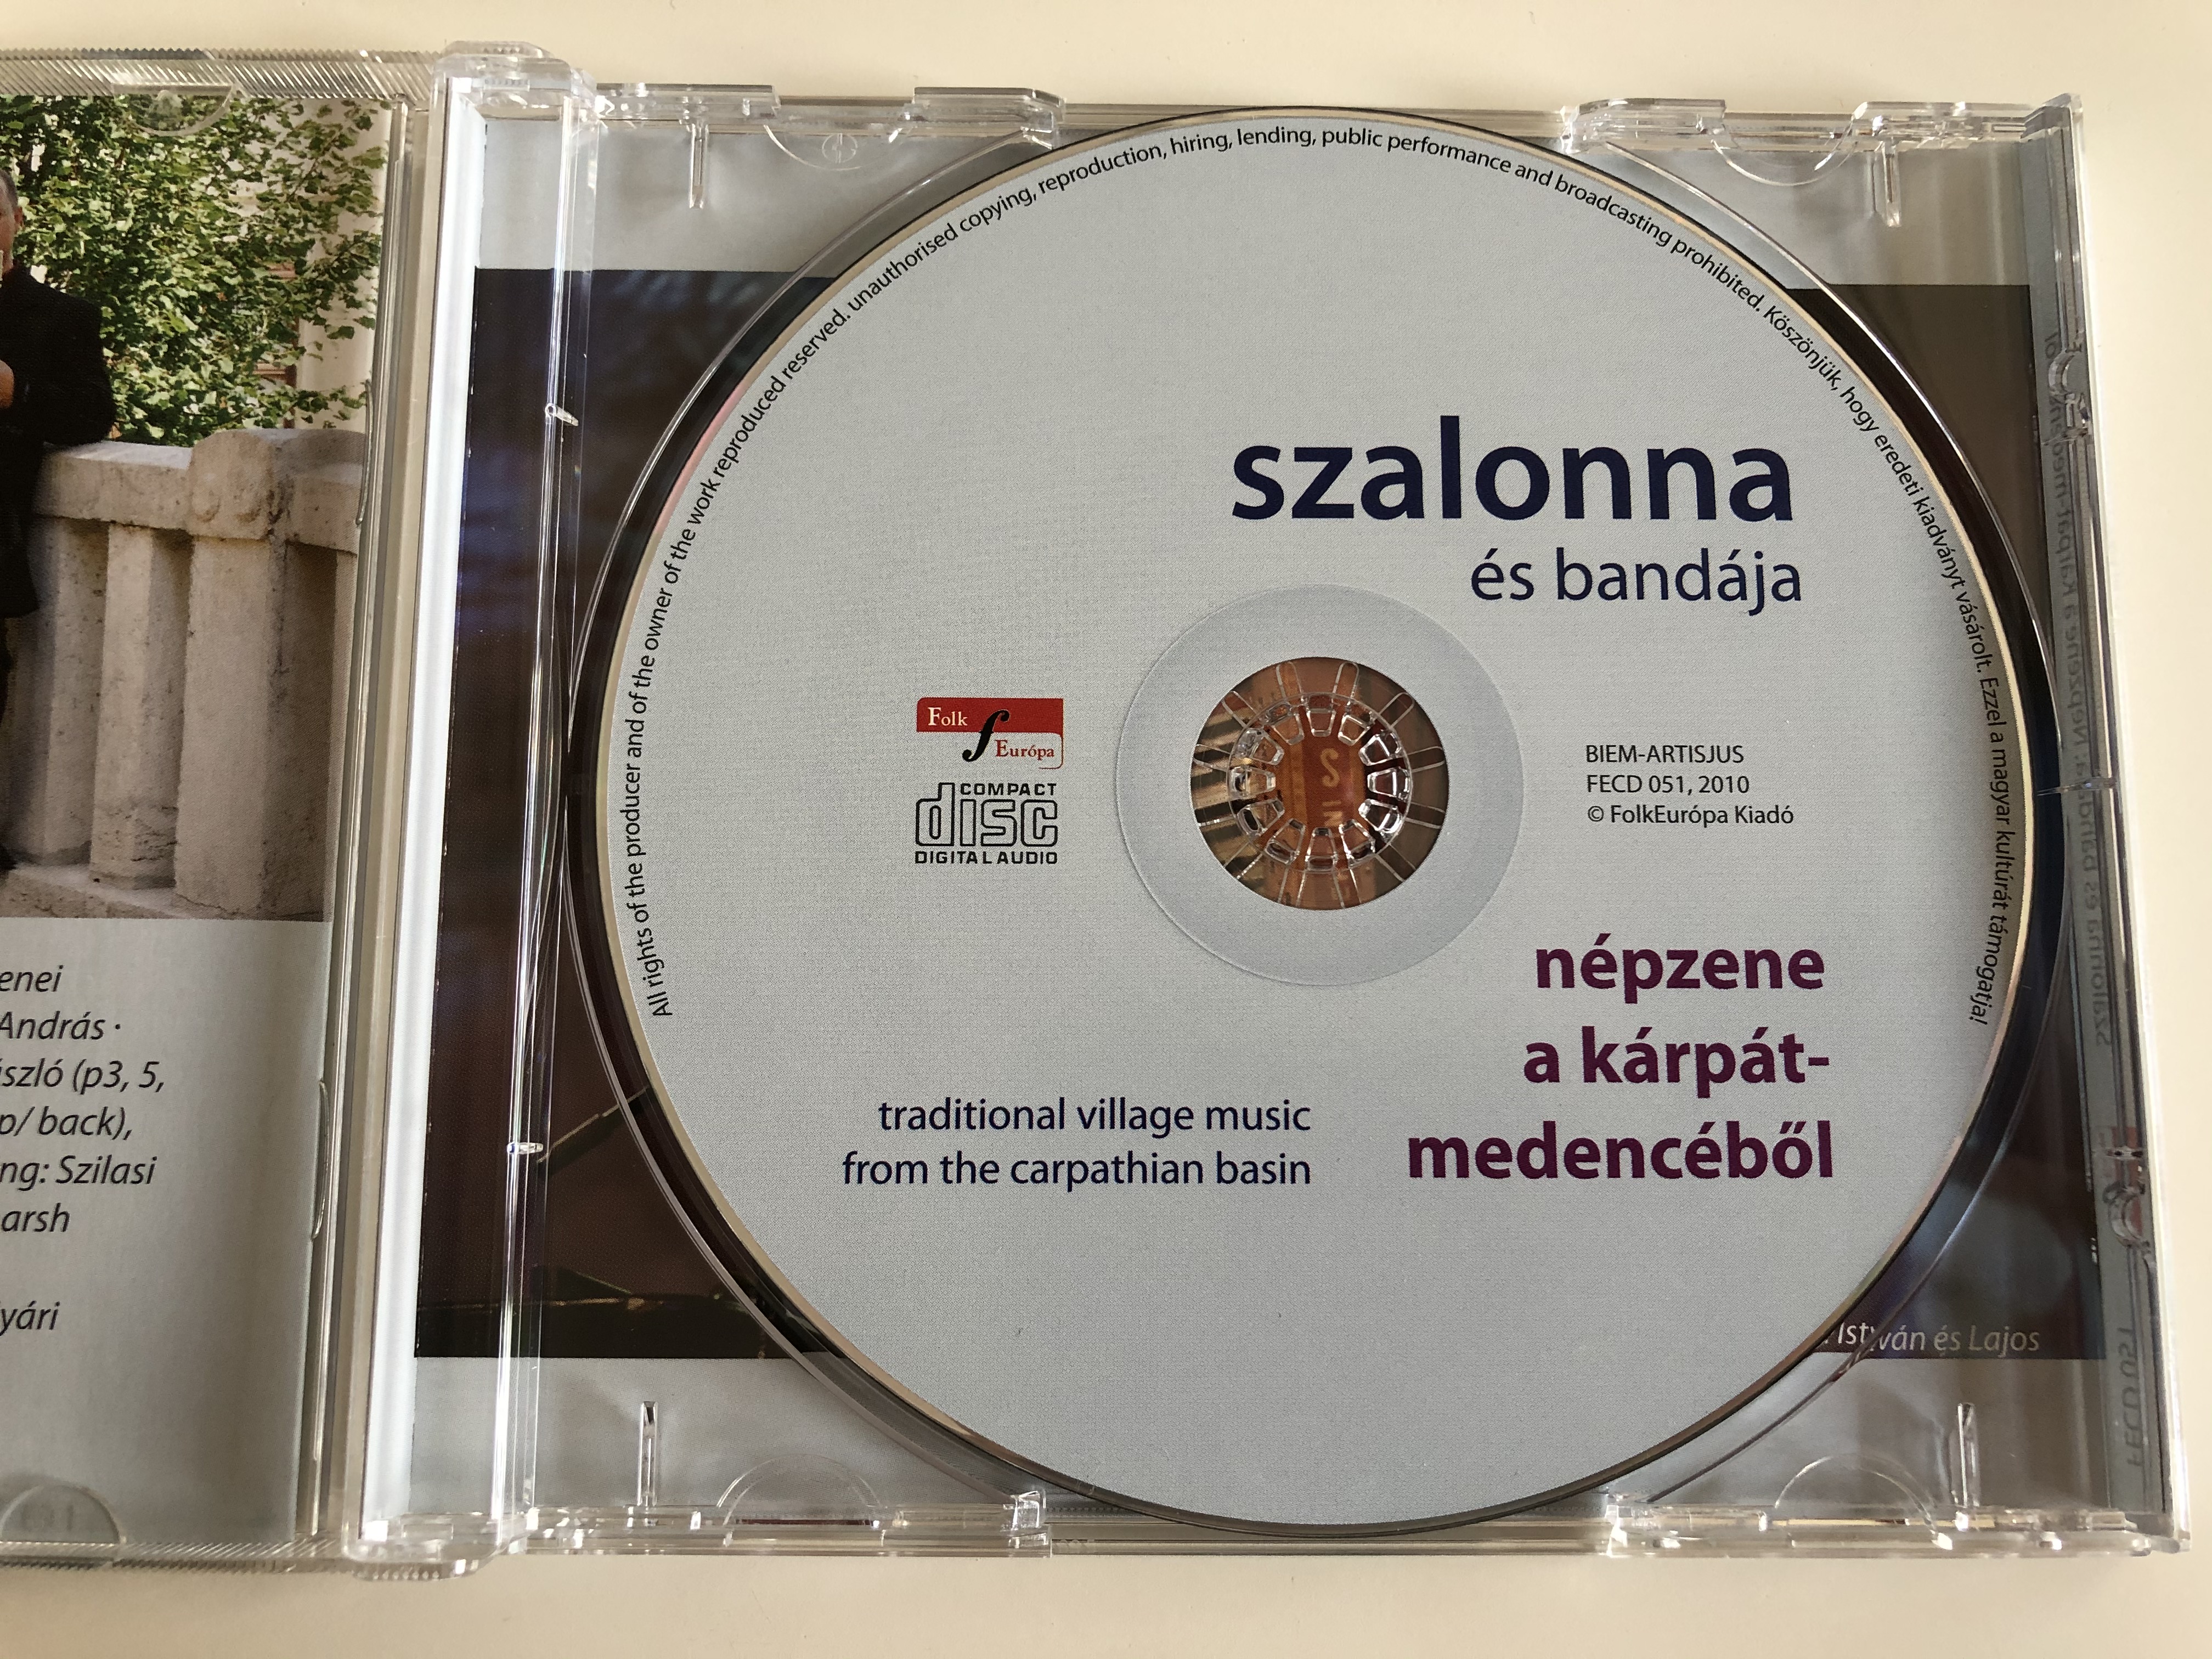 szalonna-s-band-ja-n-pzene-a-k-rp-t-medenc-b-l-traditional-village-music-from-the-carpathian-basin-folk-eur-pa-audio-cd-2010-fecd-051-8-.jpg